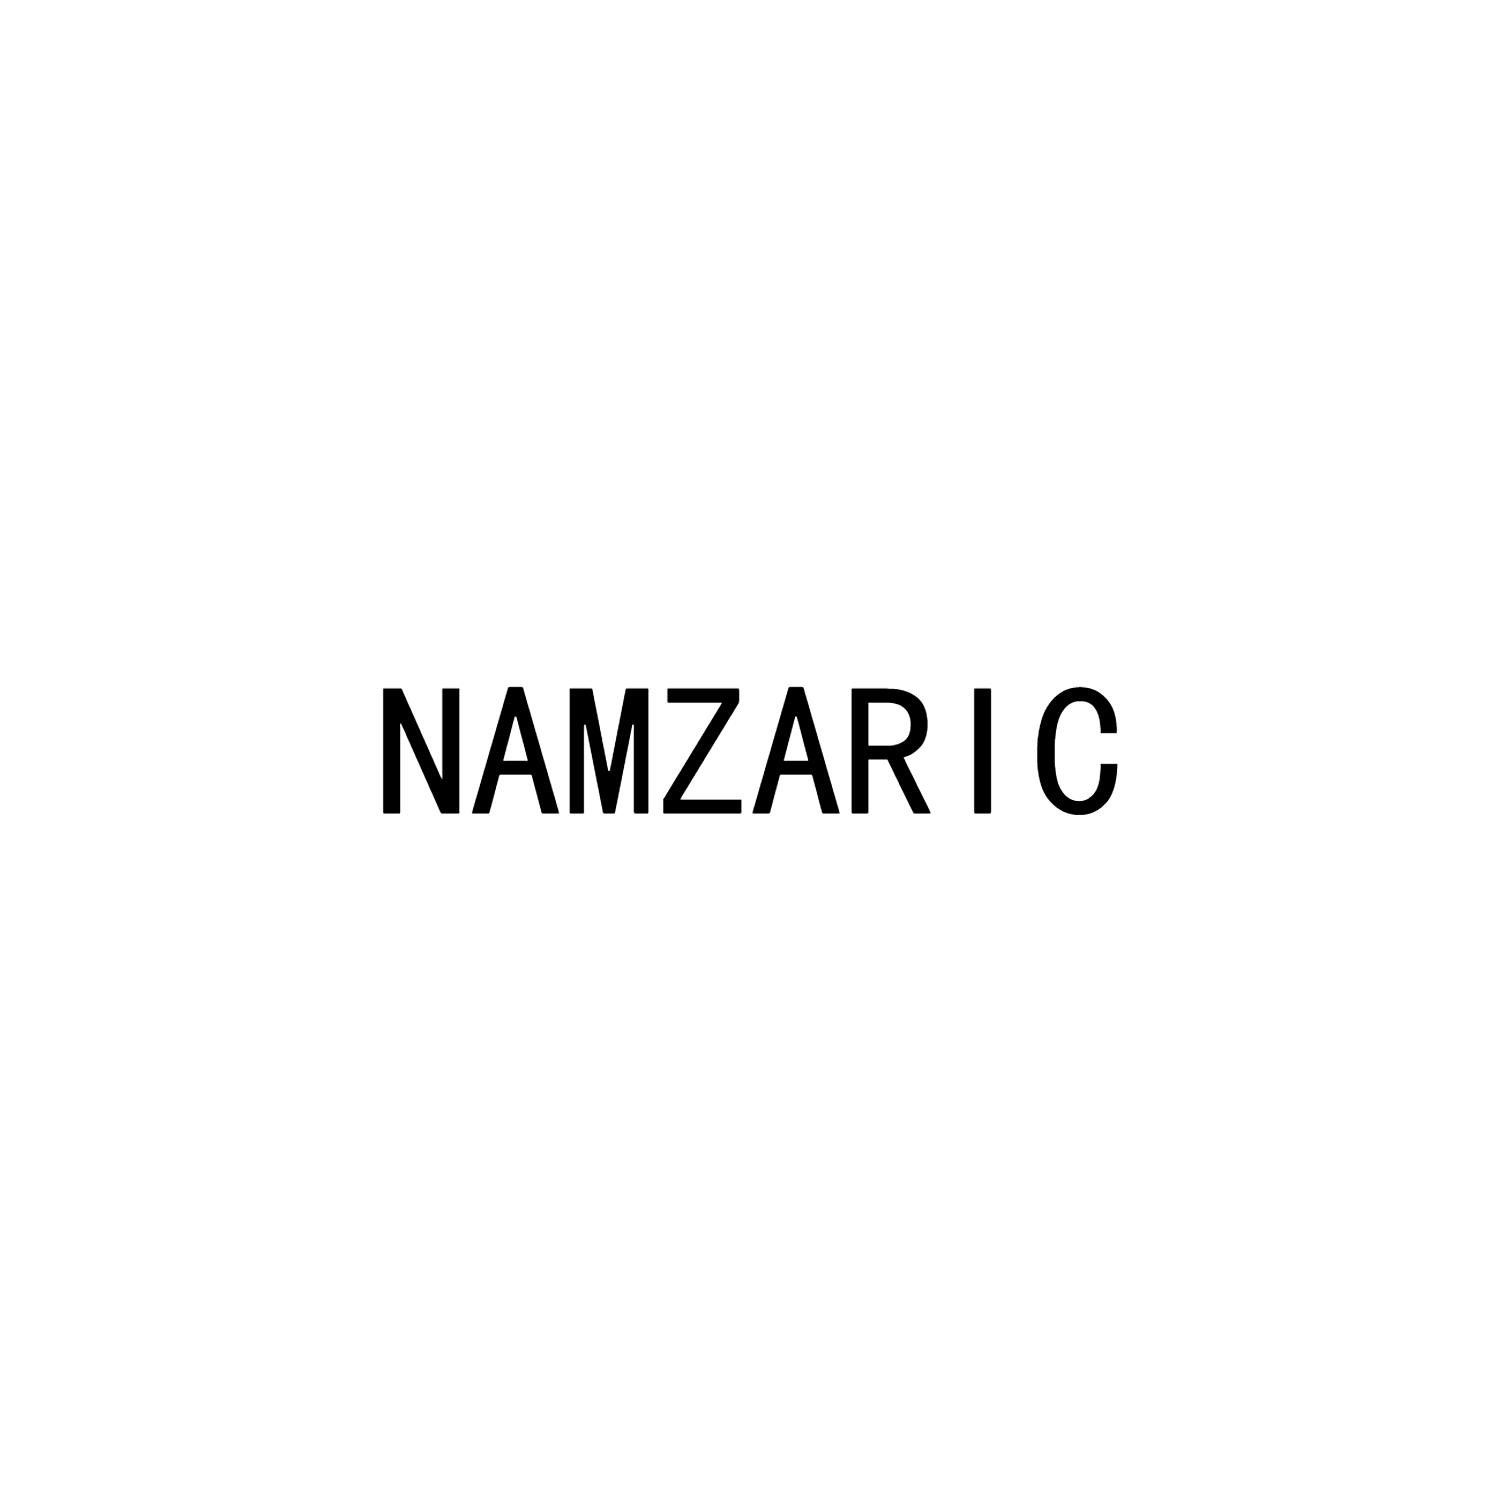 NAMZARIC